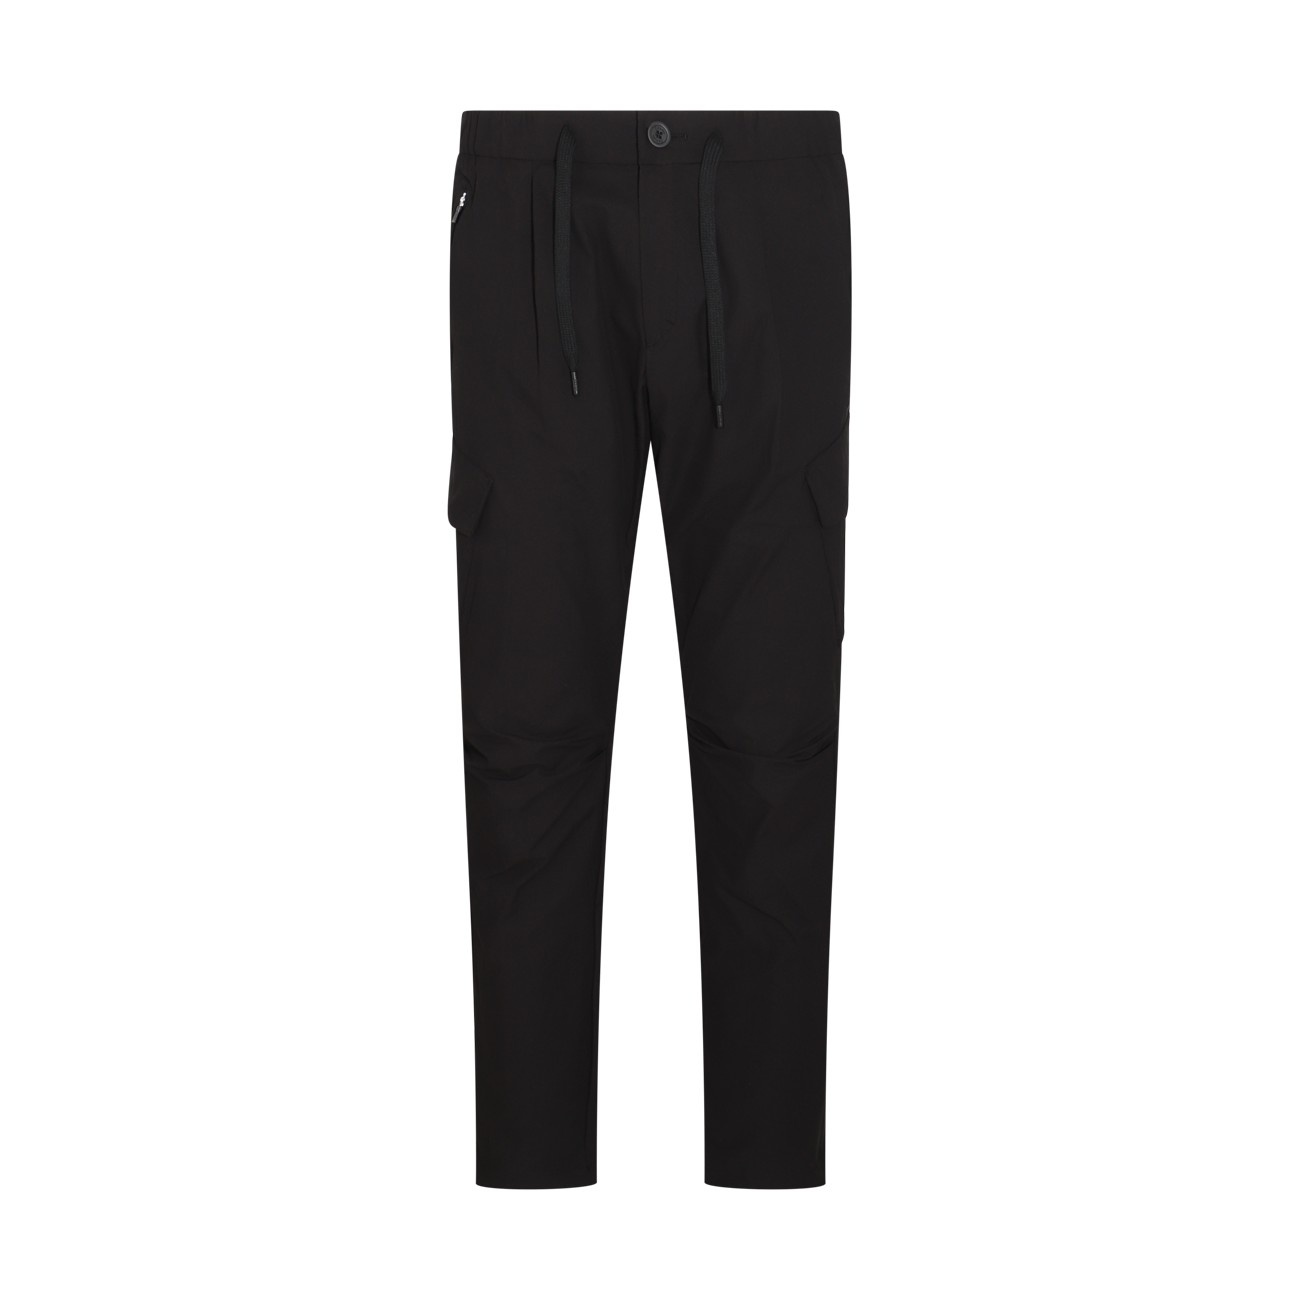 black nylon pants - 1